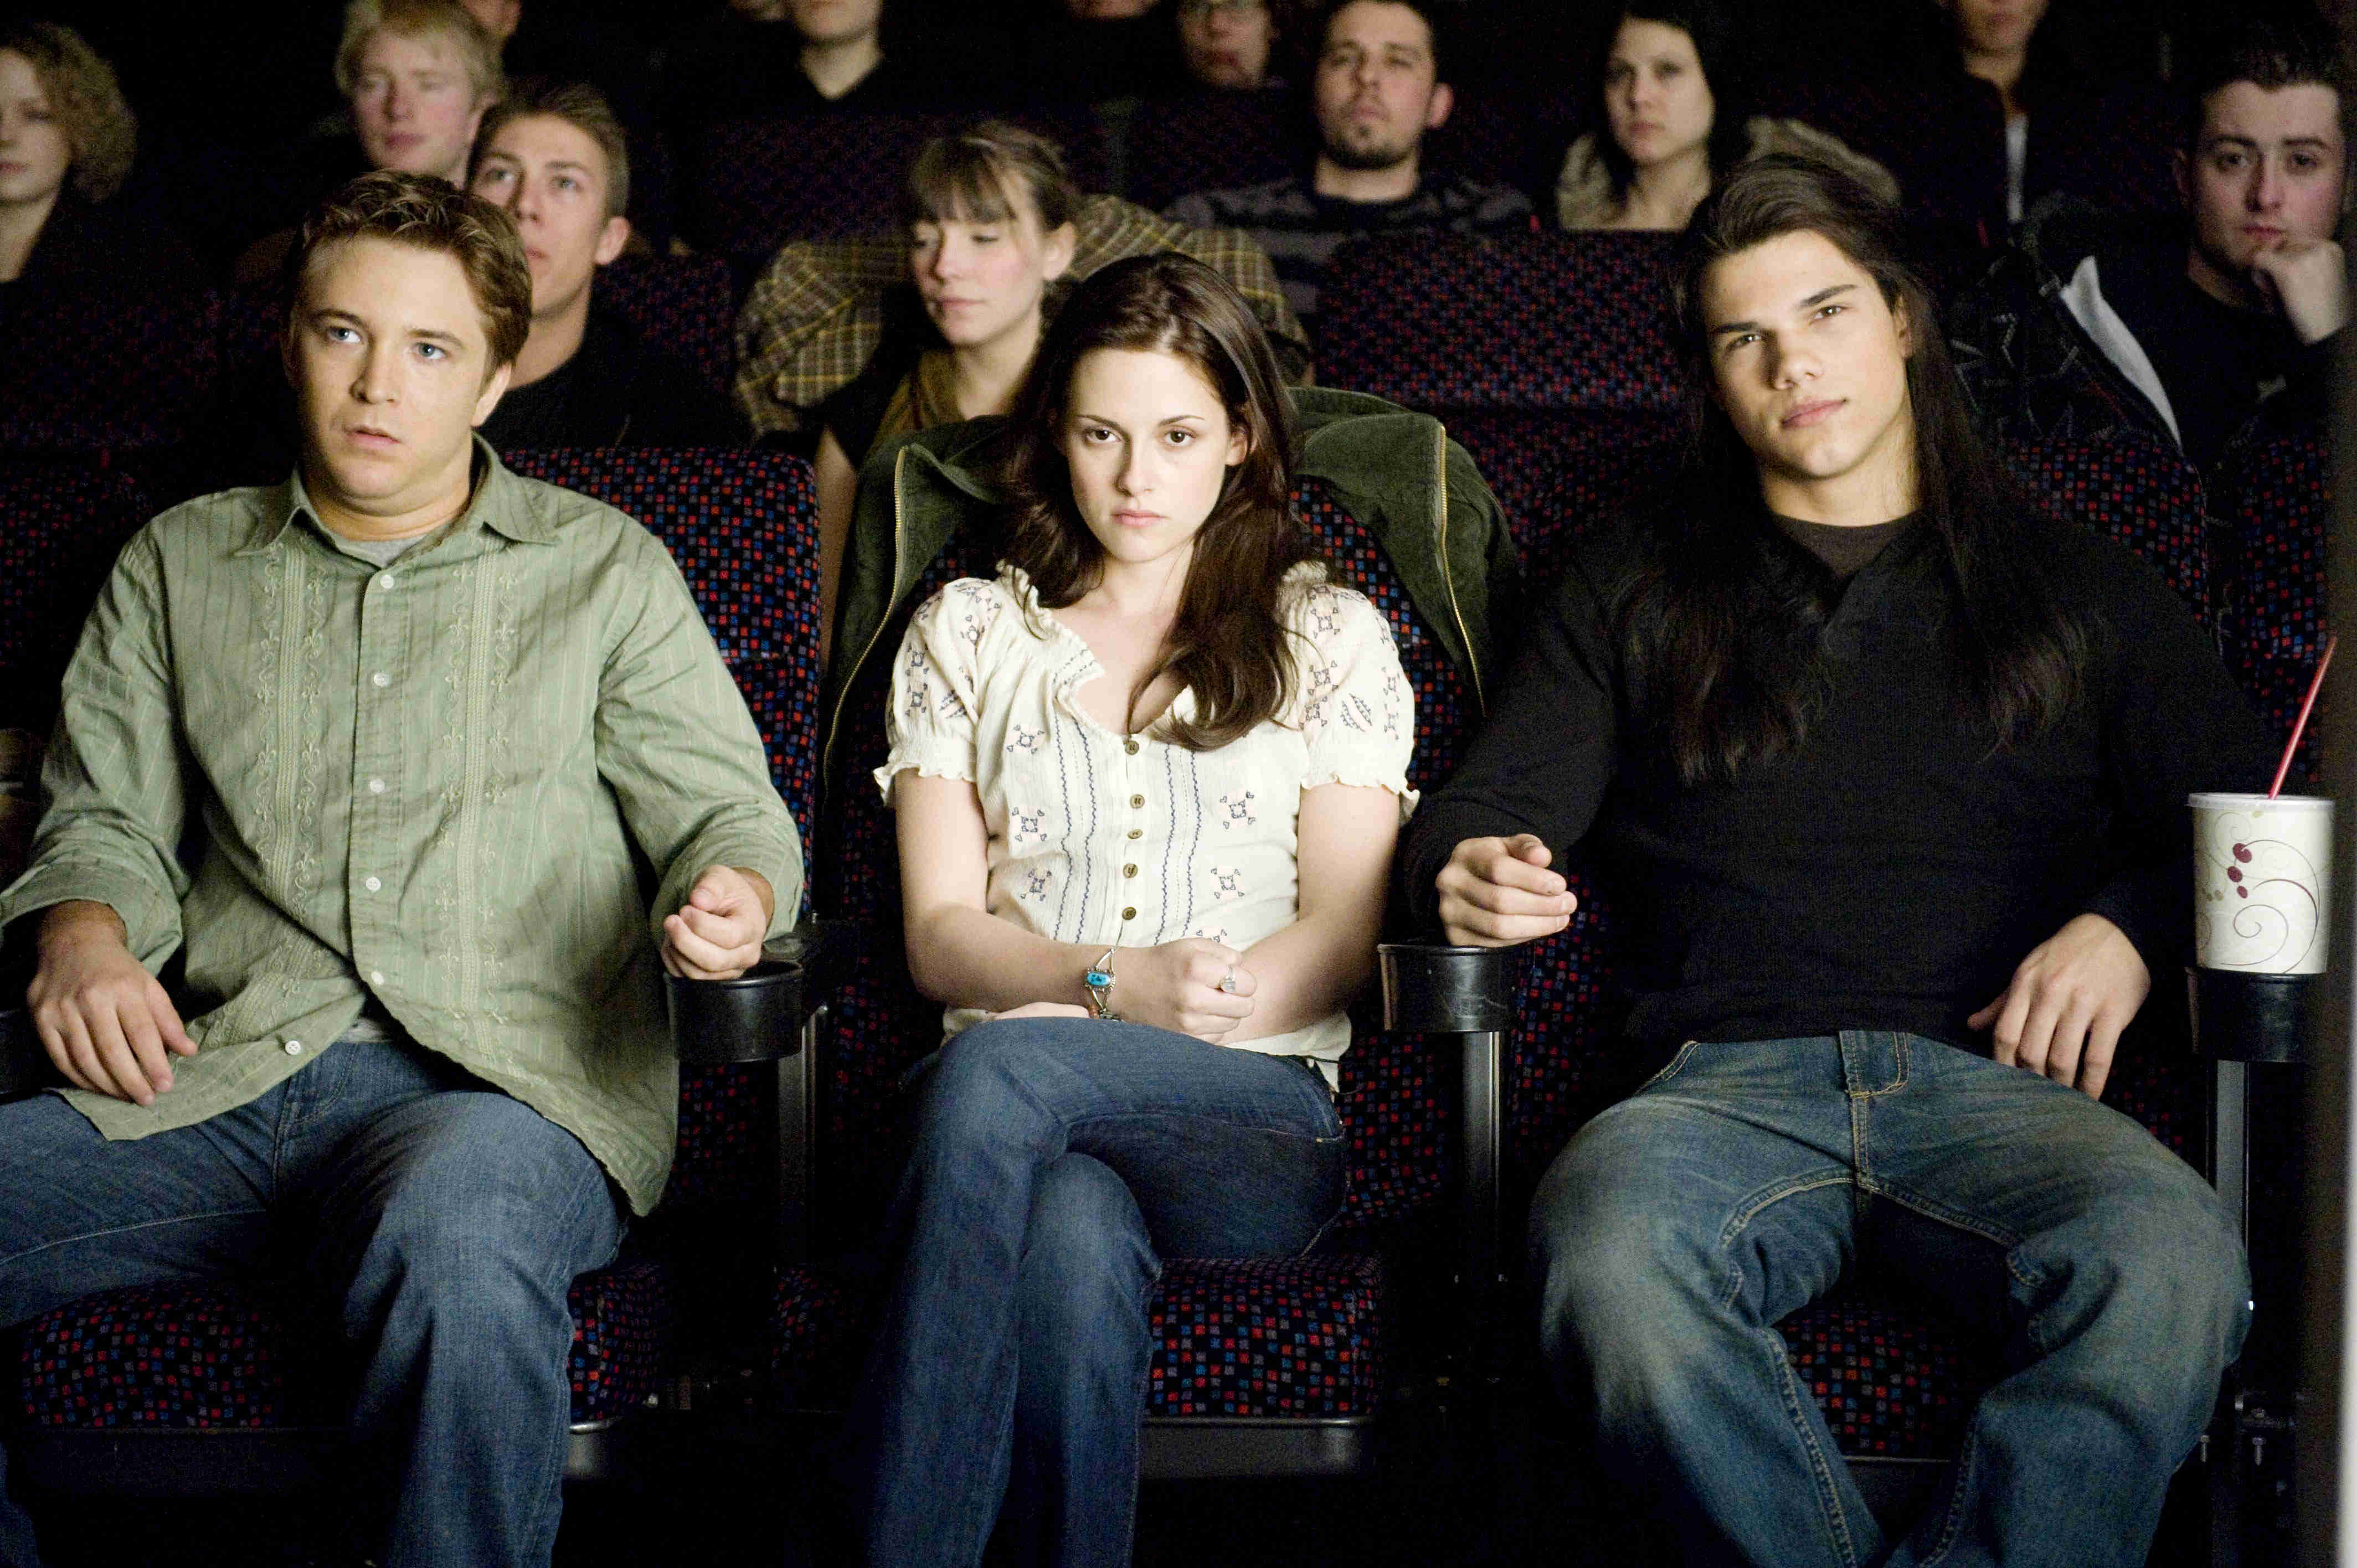 Michael Welch, Kristen Stewart and Taylor Lautner in Summit Entertainment's The Twilight Saga's New Moon (2009)